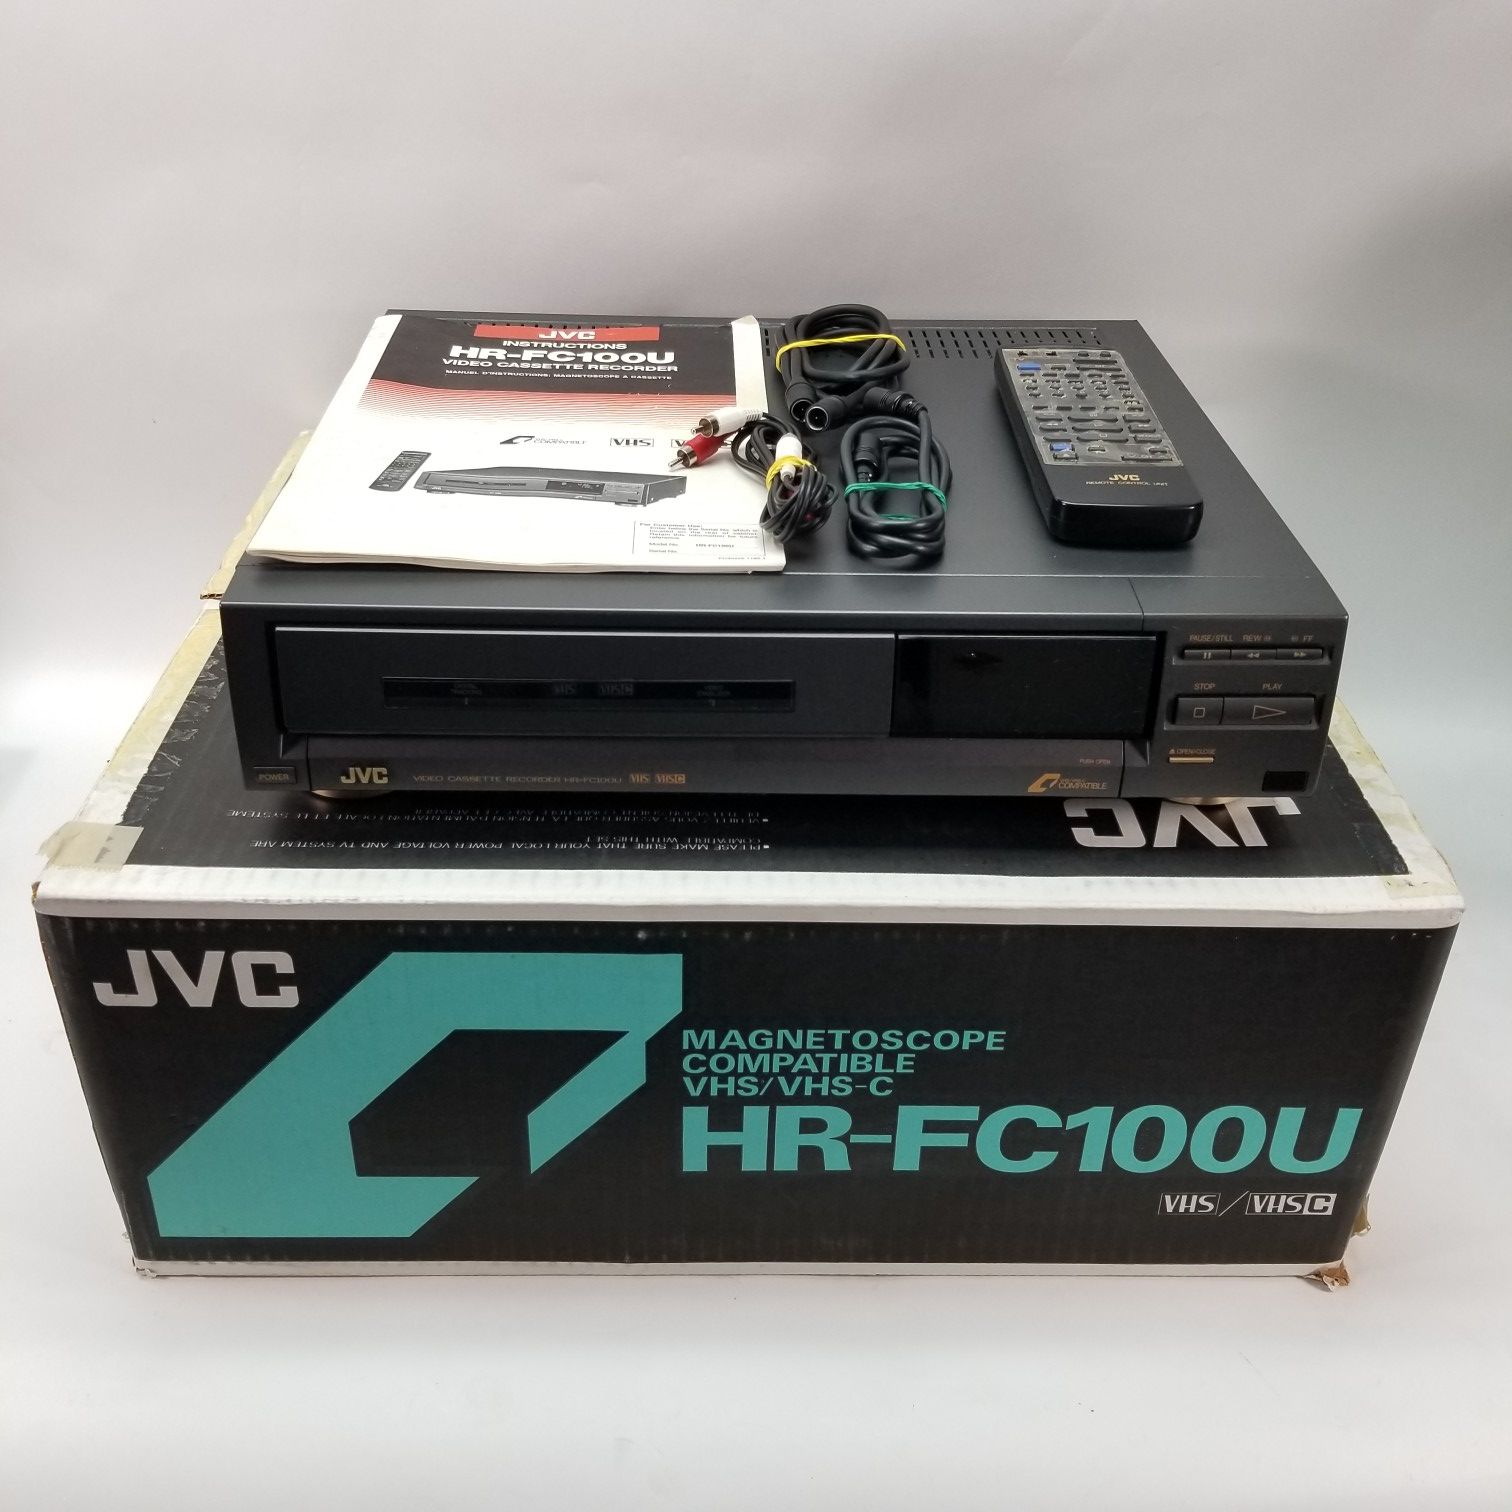 JVC Hi-Fi Stereo Video Cassette Recorder HR-FC100U VCR VHS/VHS-C w/Remote & Box